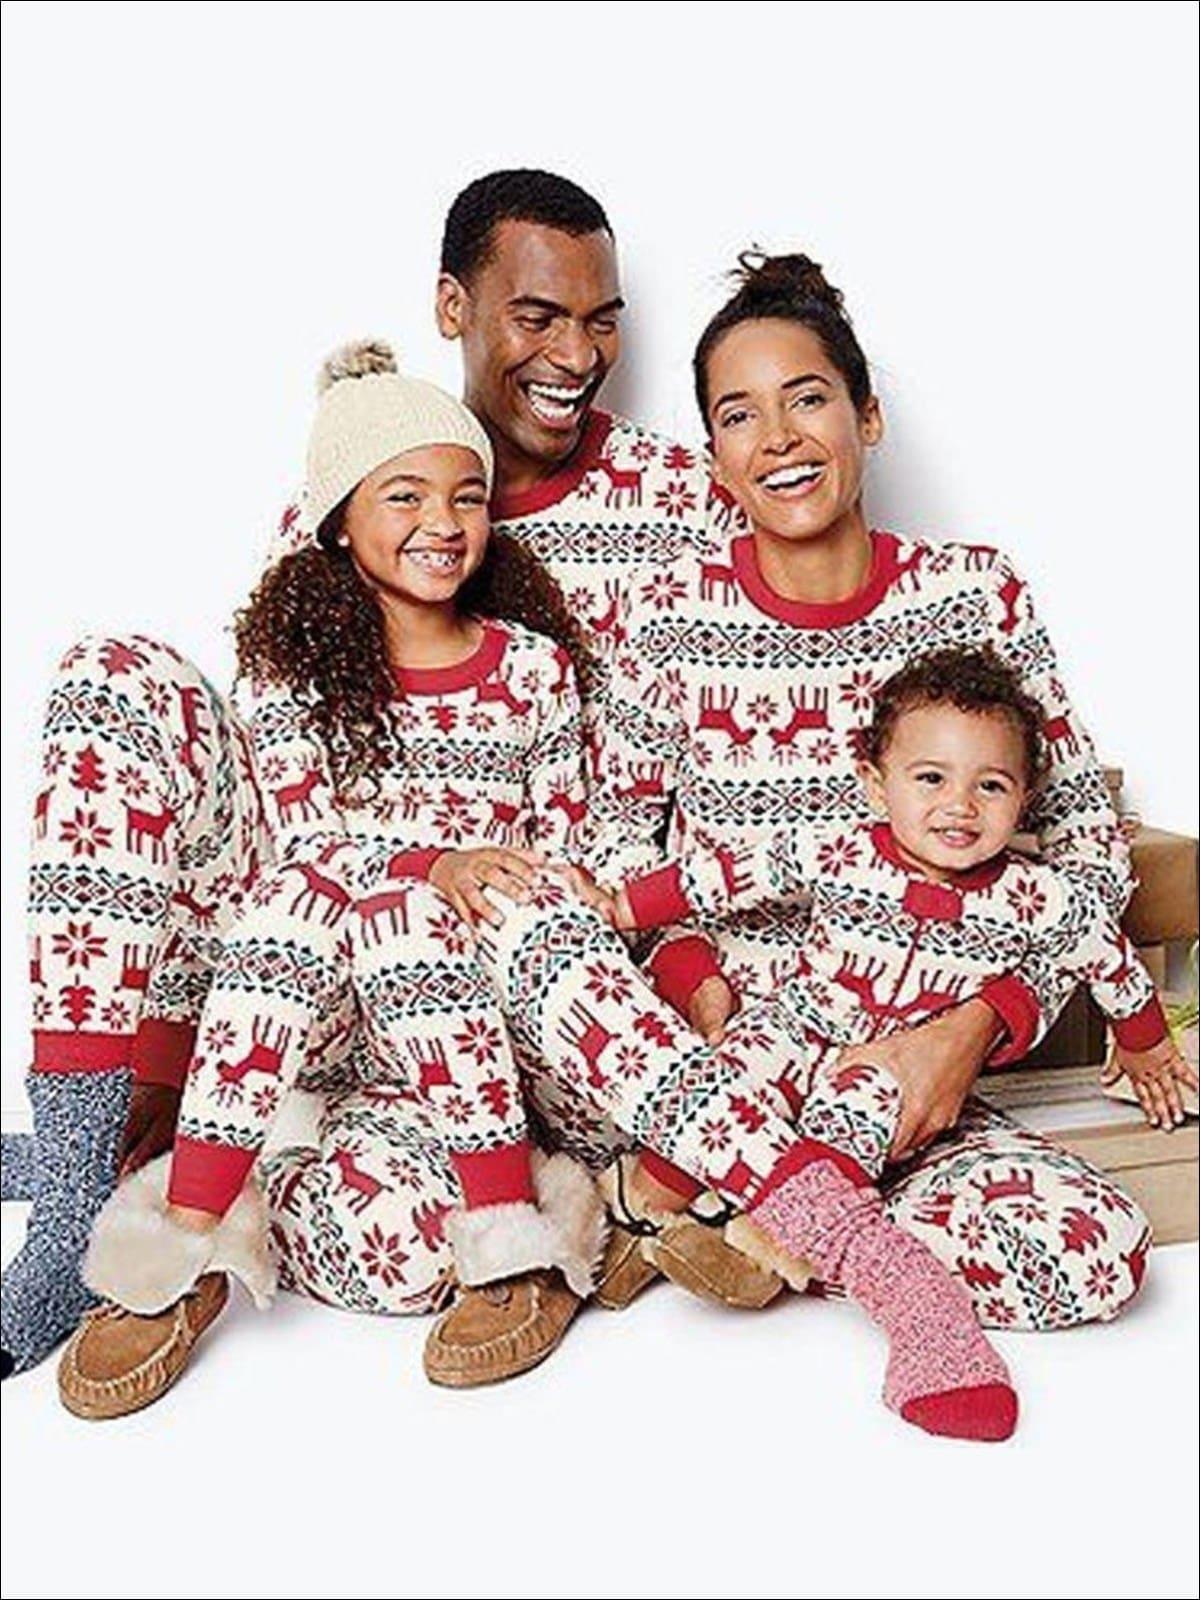 Family Style Winter Reindeer Pajamas Product Image